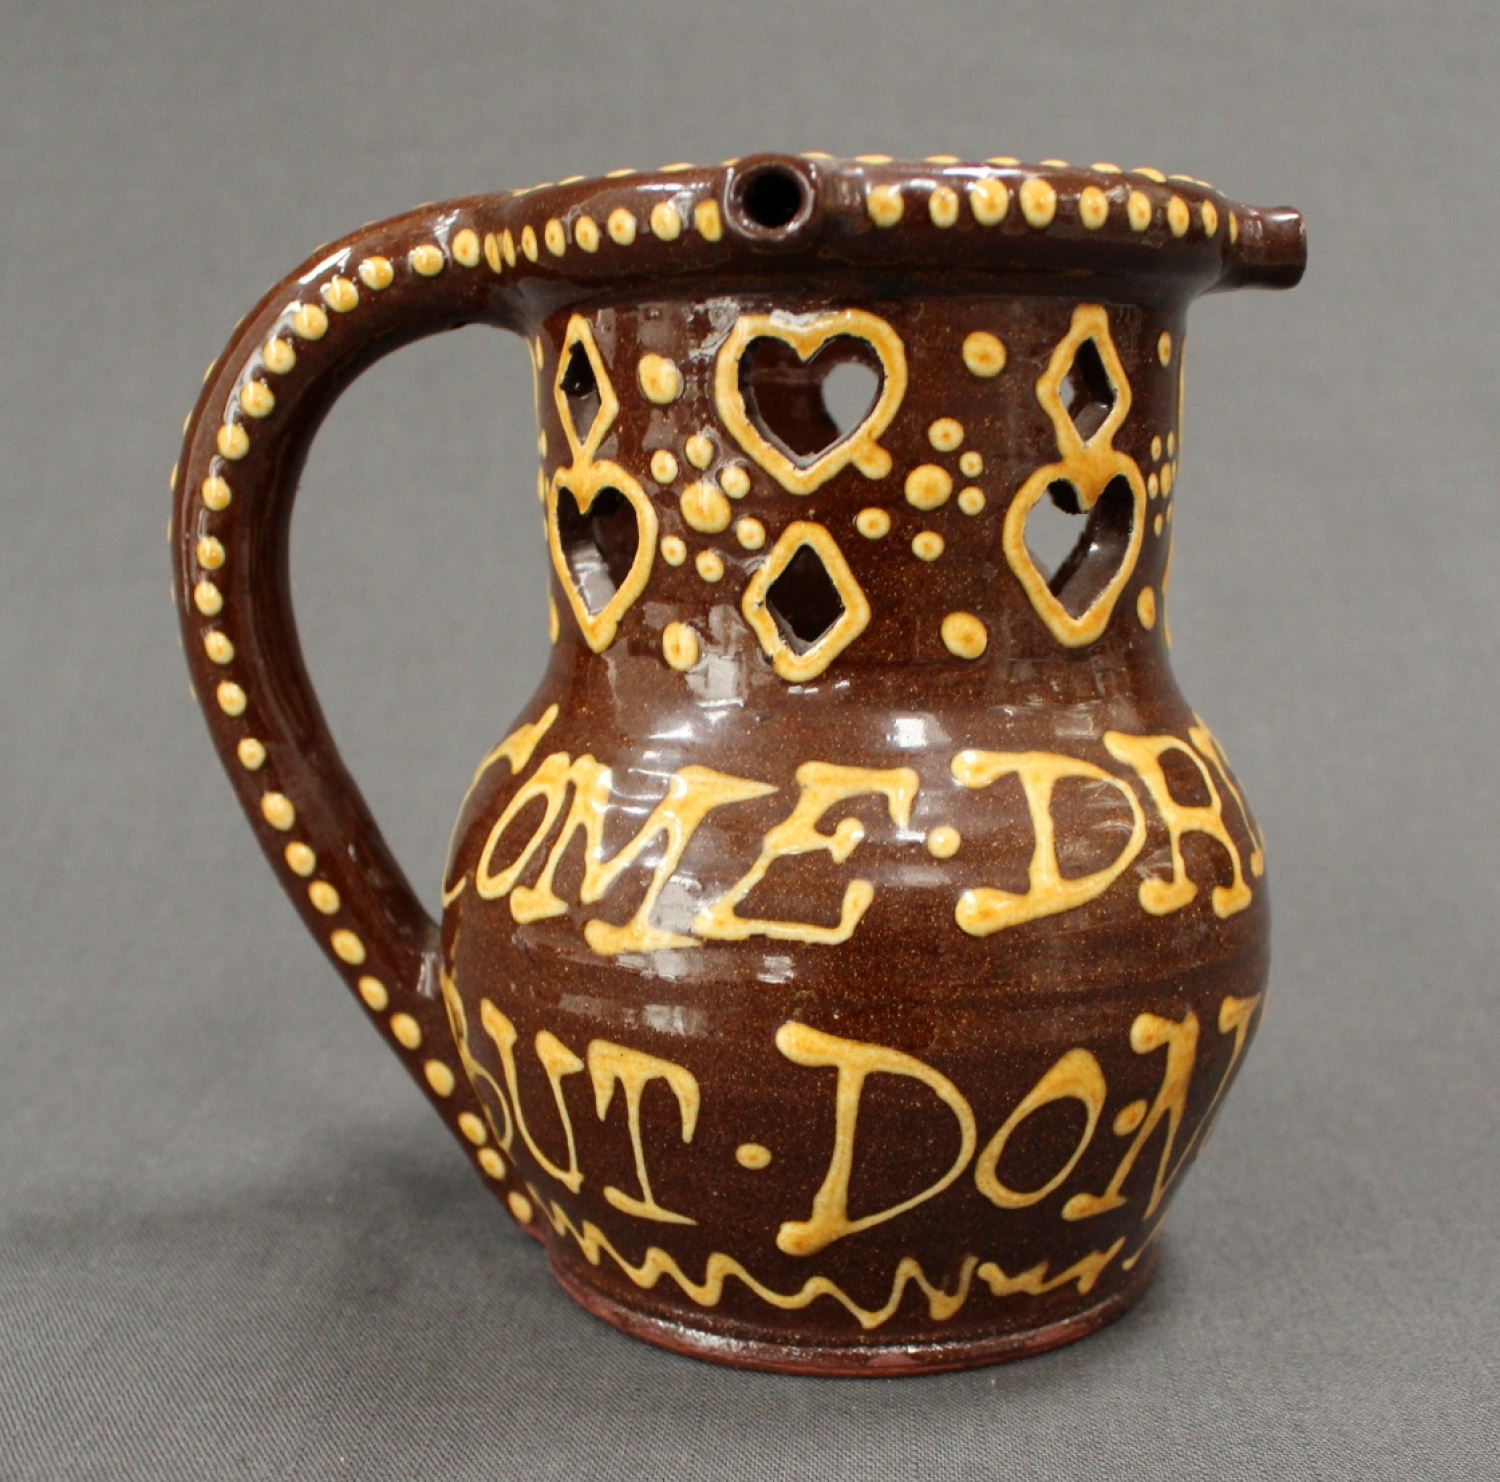 A glazed terracotta puzzle jug